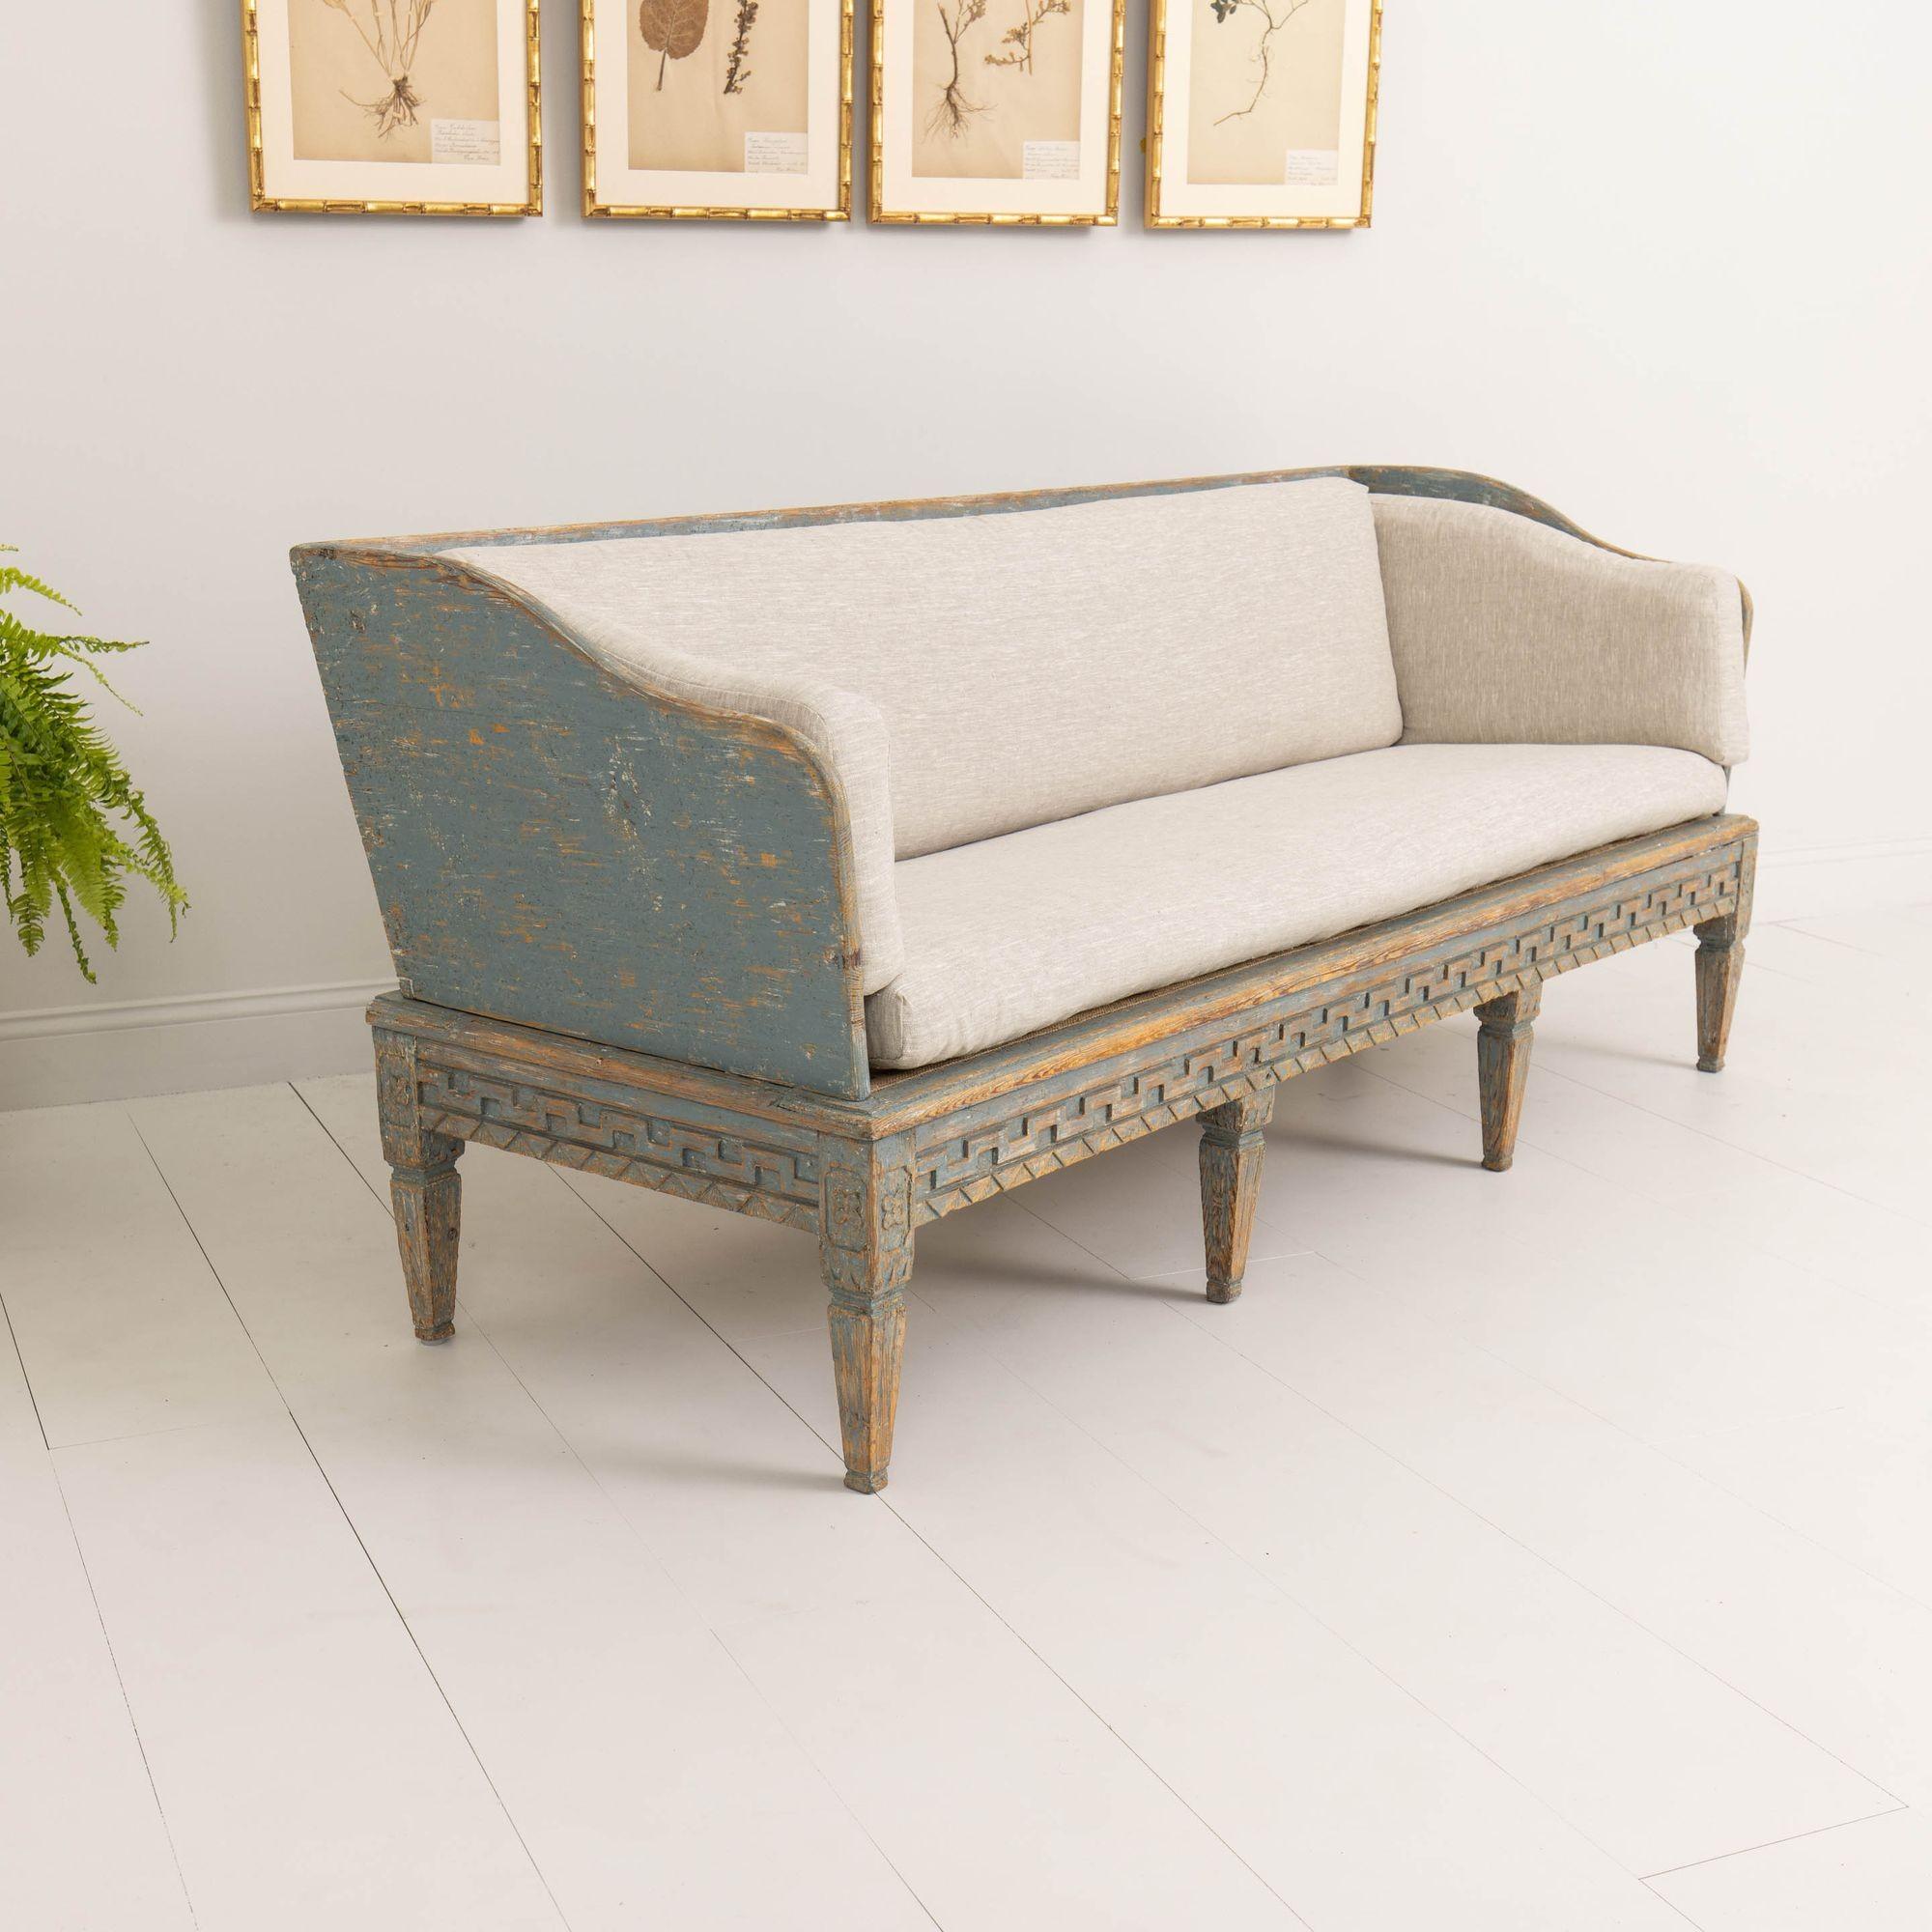 18th c. Swedish Gustavian Period Painted Sofa 'Trägsoffa' For Sale 2